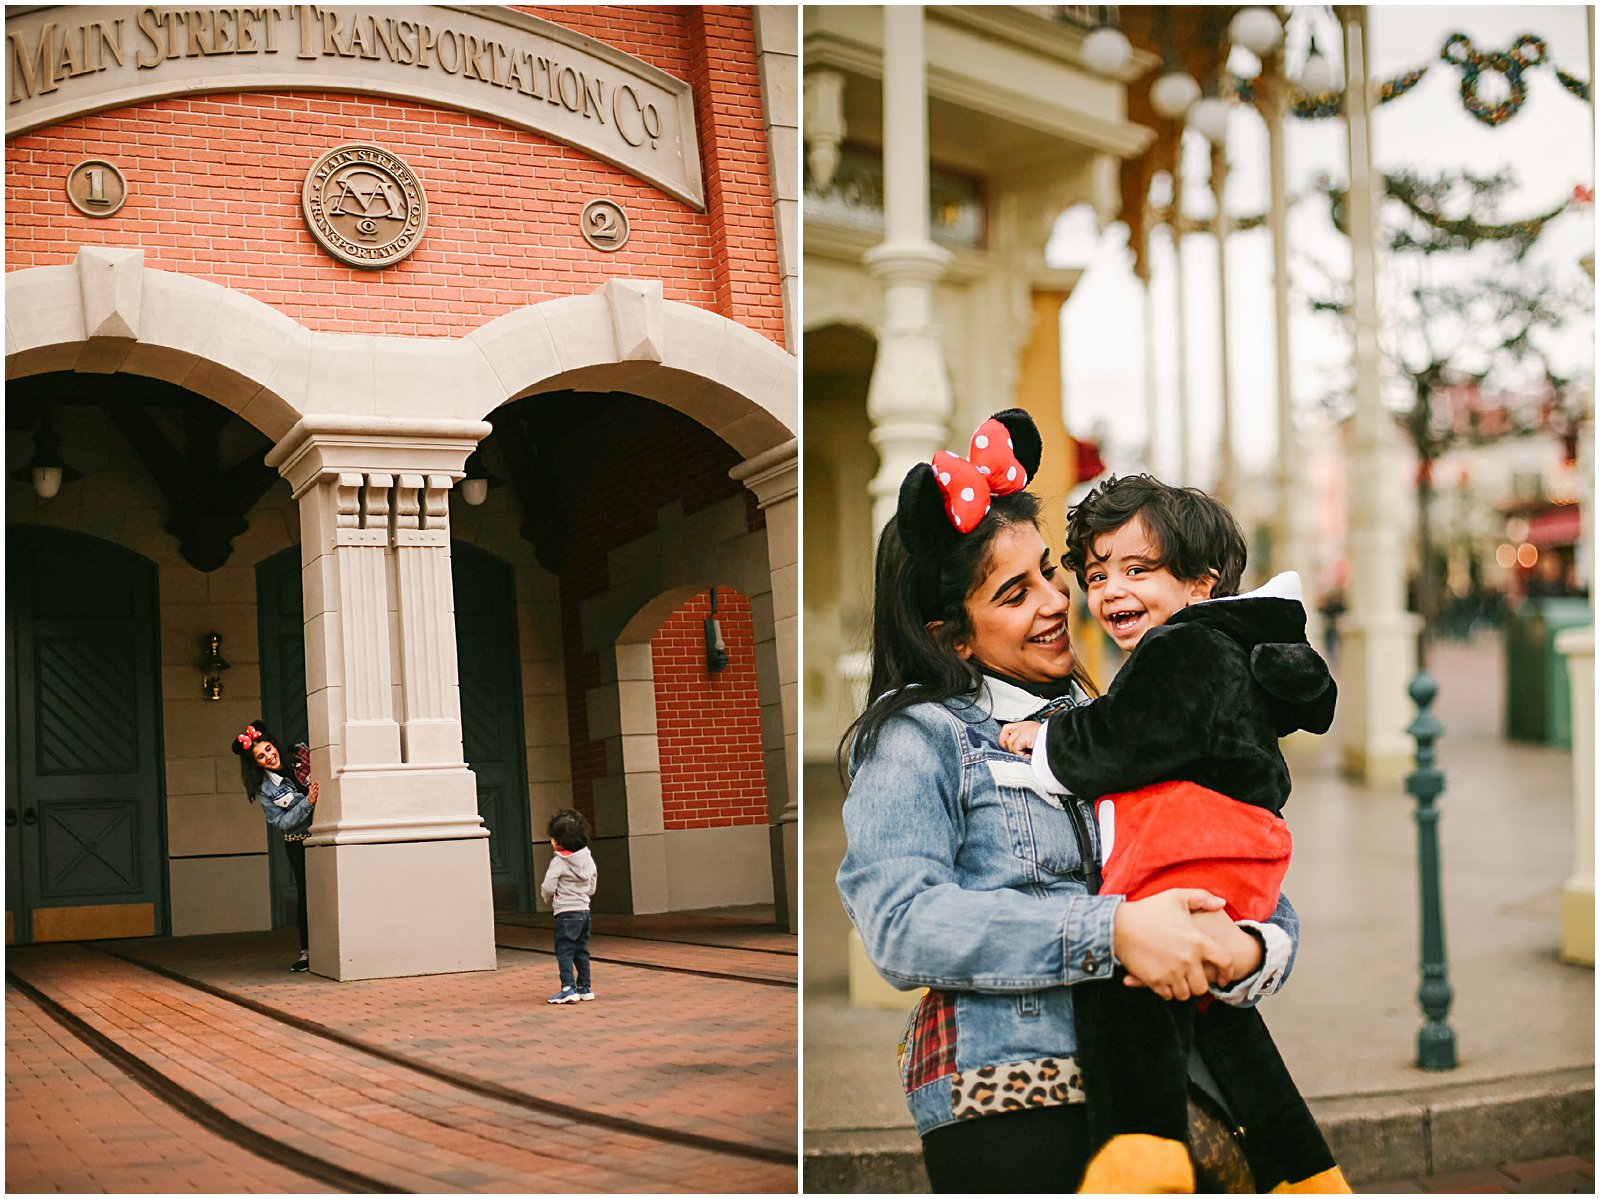 Disneyland Paris Photographer Helena Woods photographs mom and son on Main Street